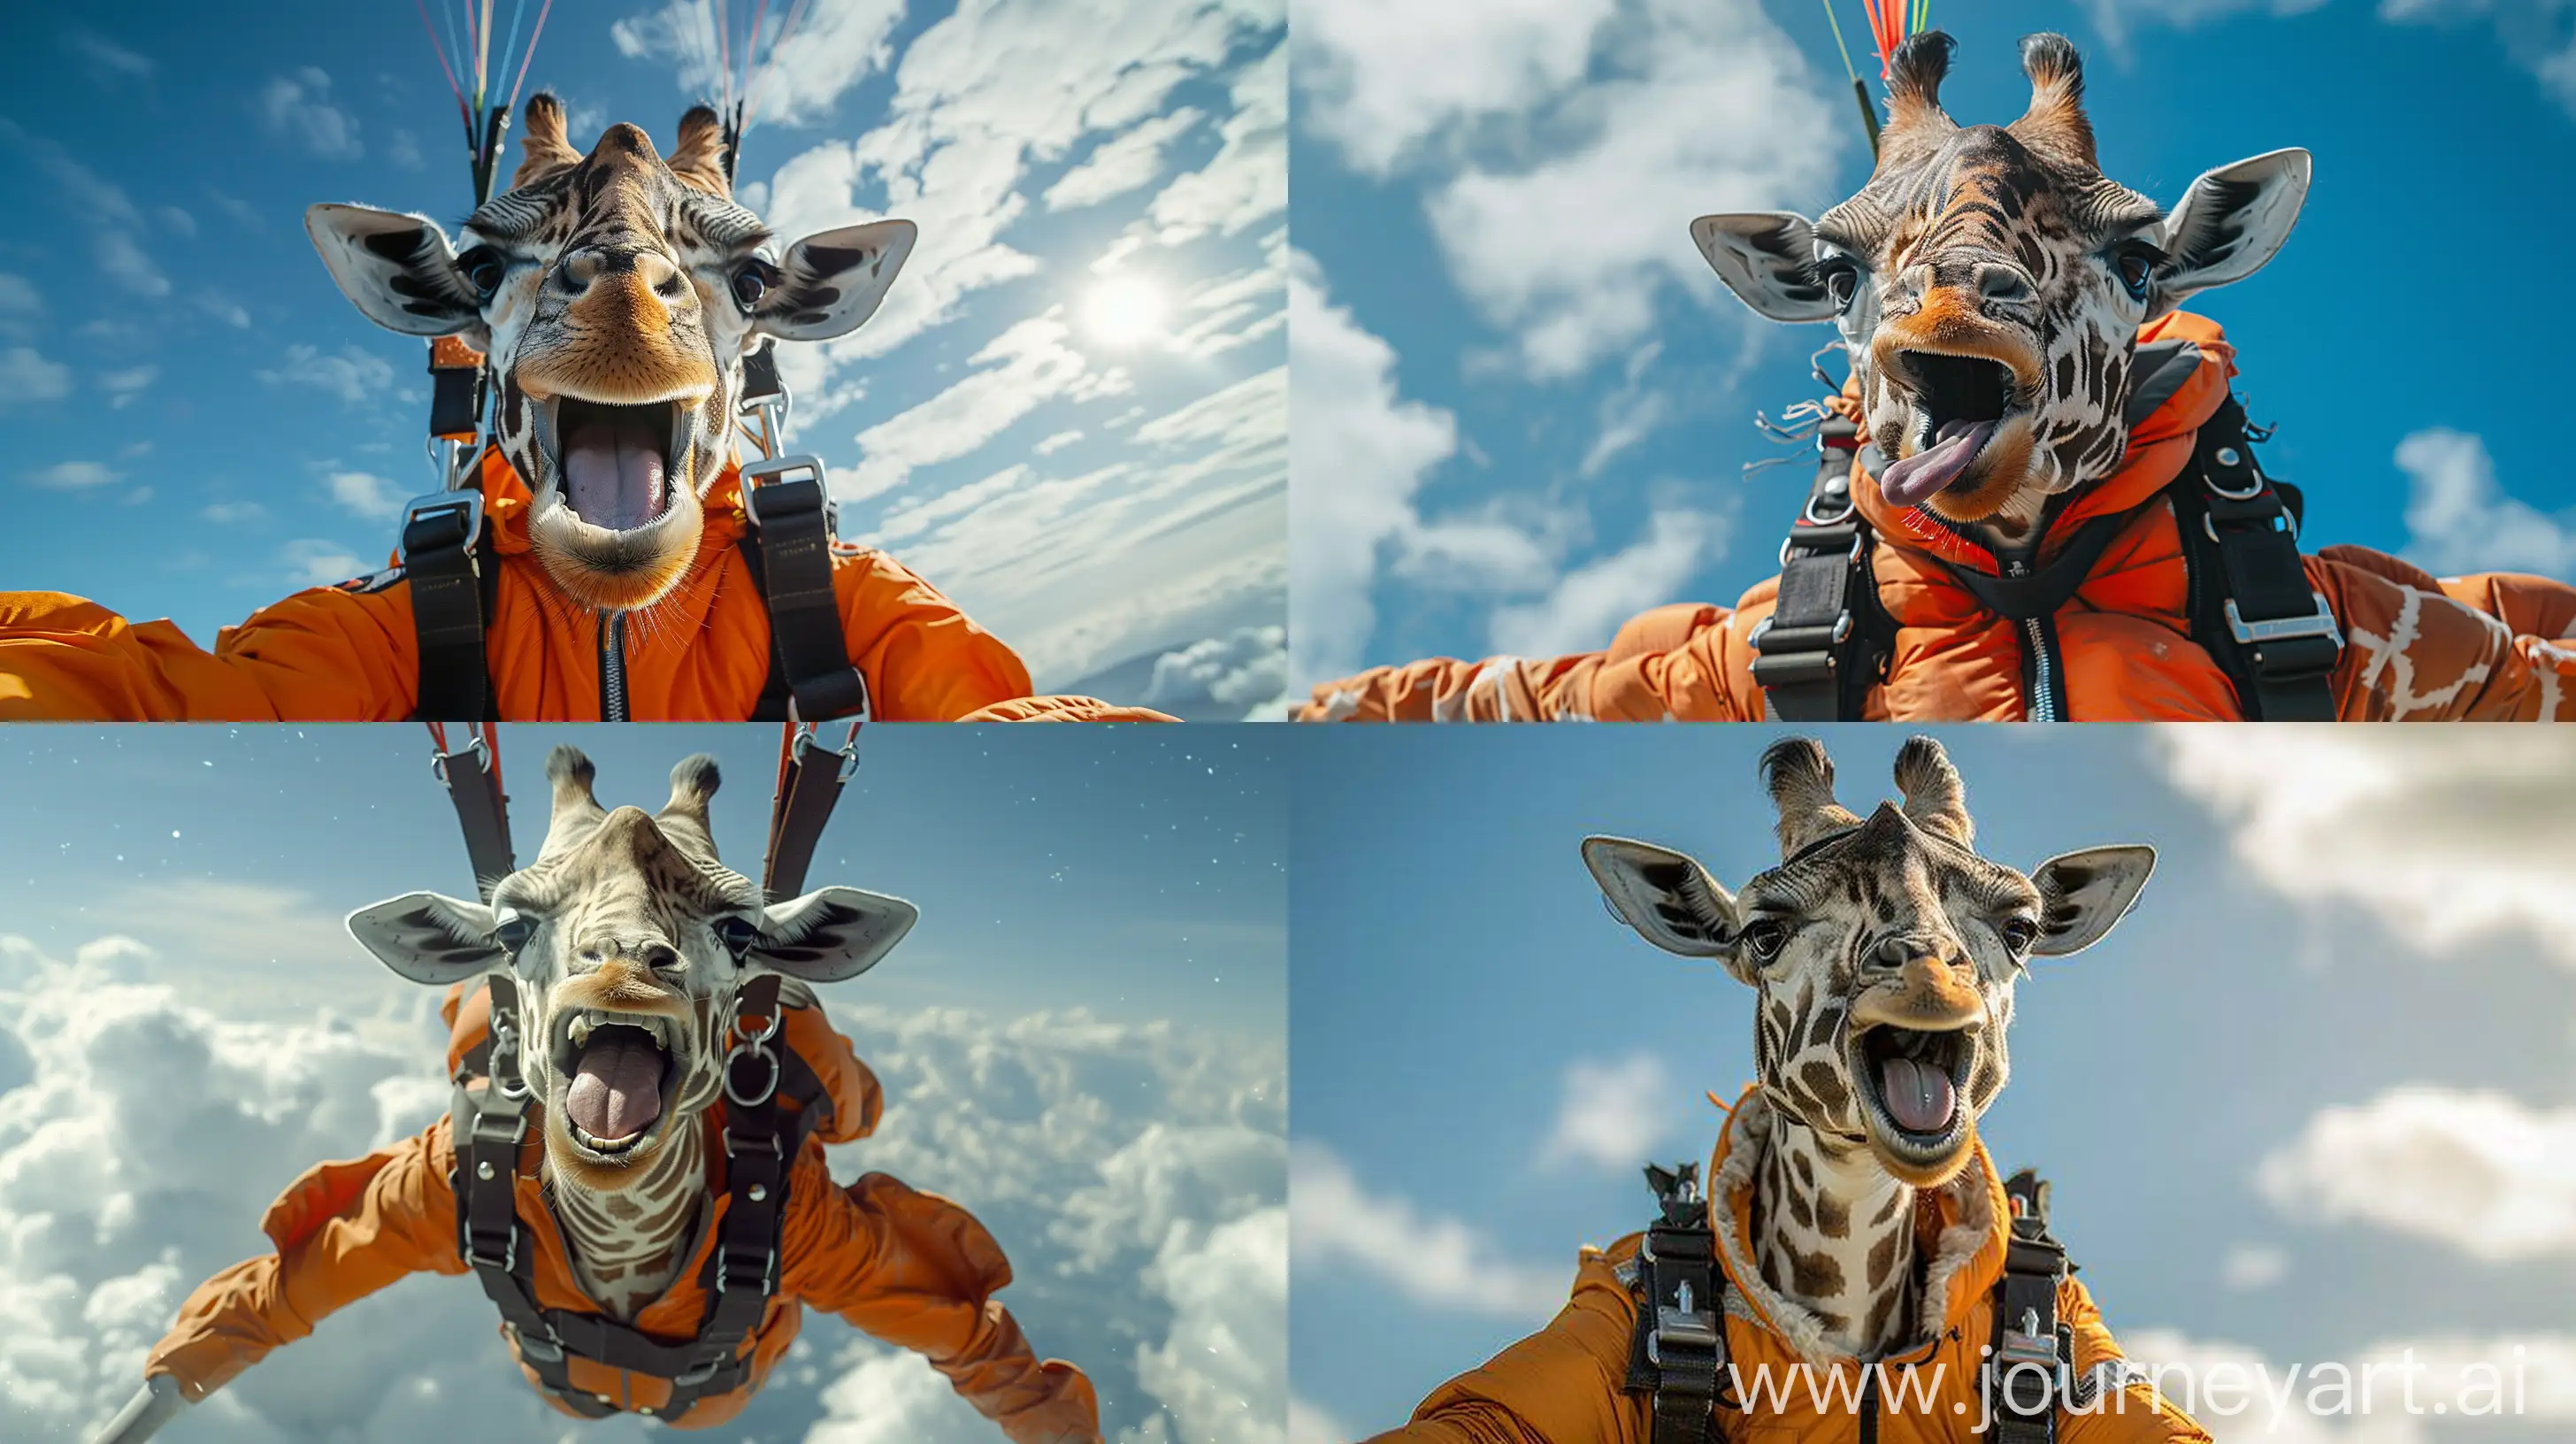 Joyful-Giraffe-Skydiving-in-Orange-Bodysuit-and-Goggles